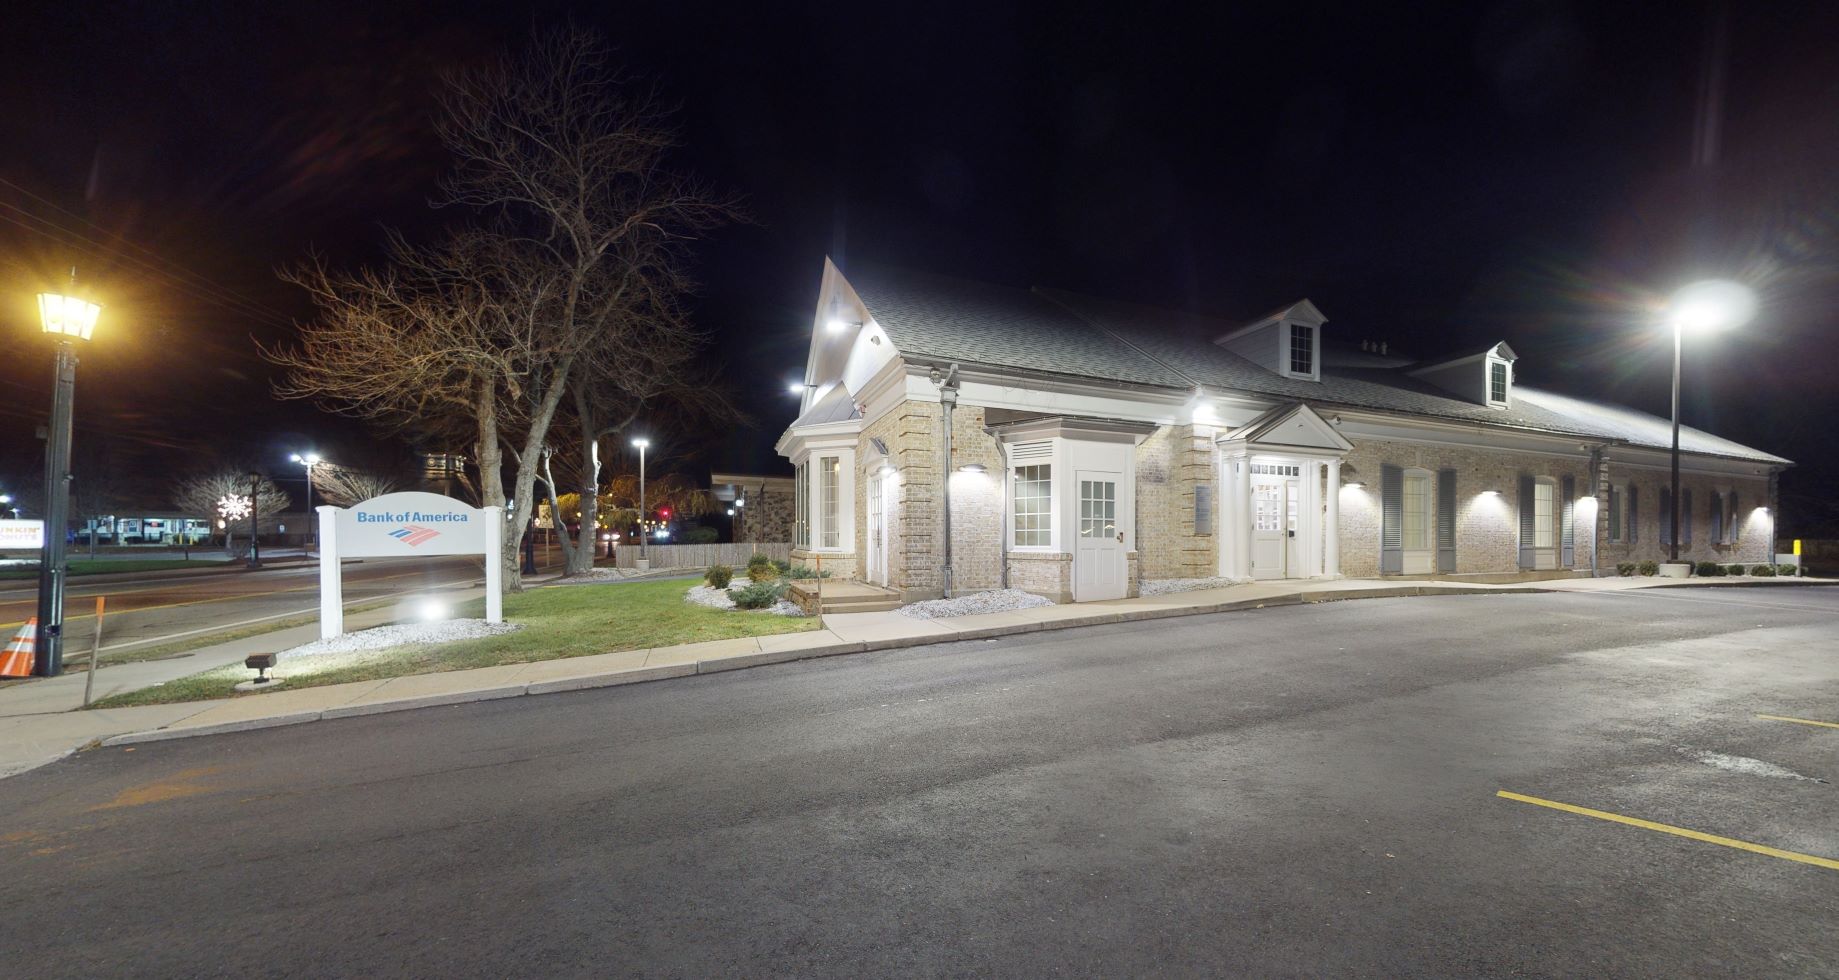 Bank of America financial center with drive-thru ATM | 257 County Rd, Barrington, RI 02806